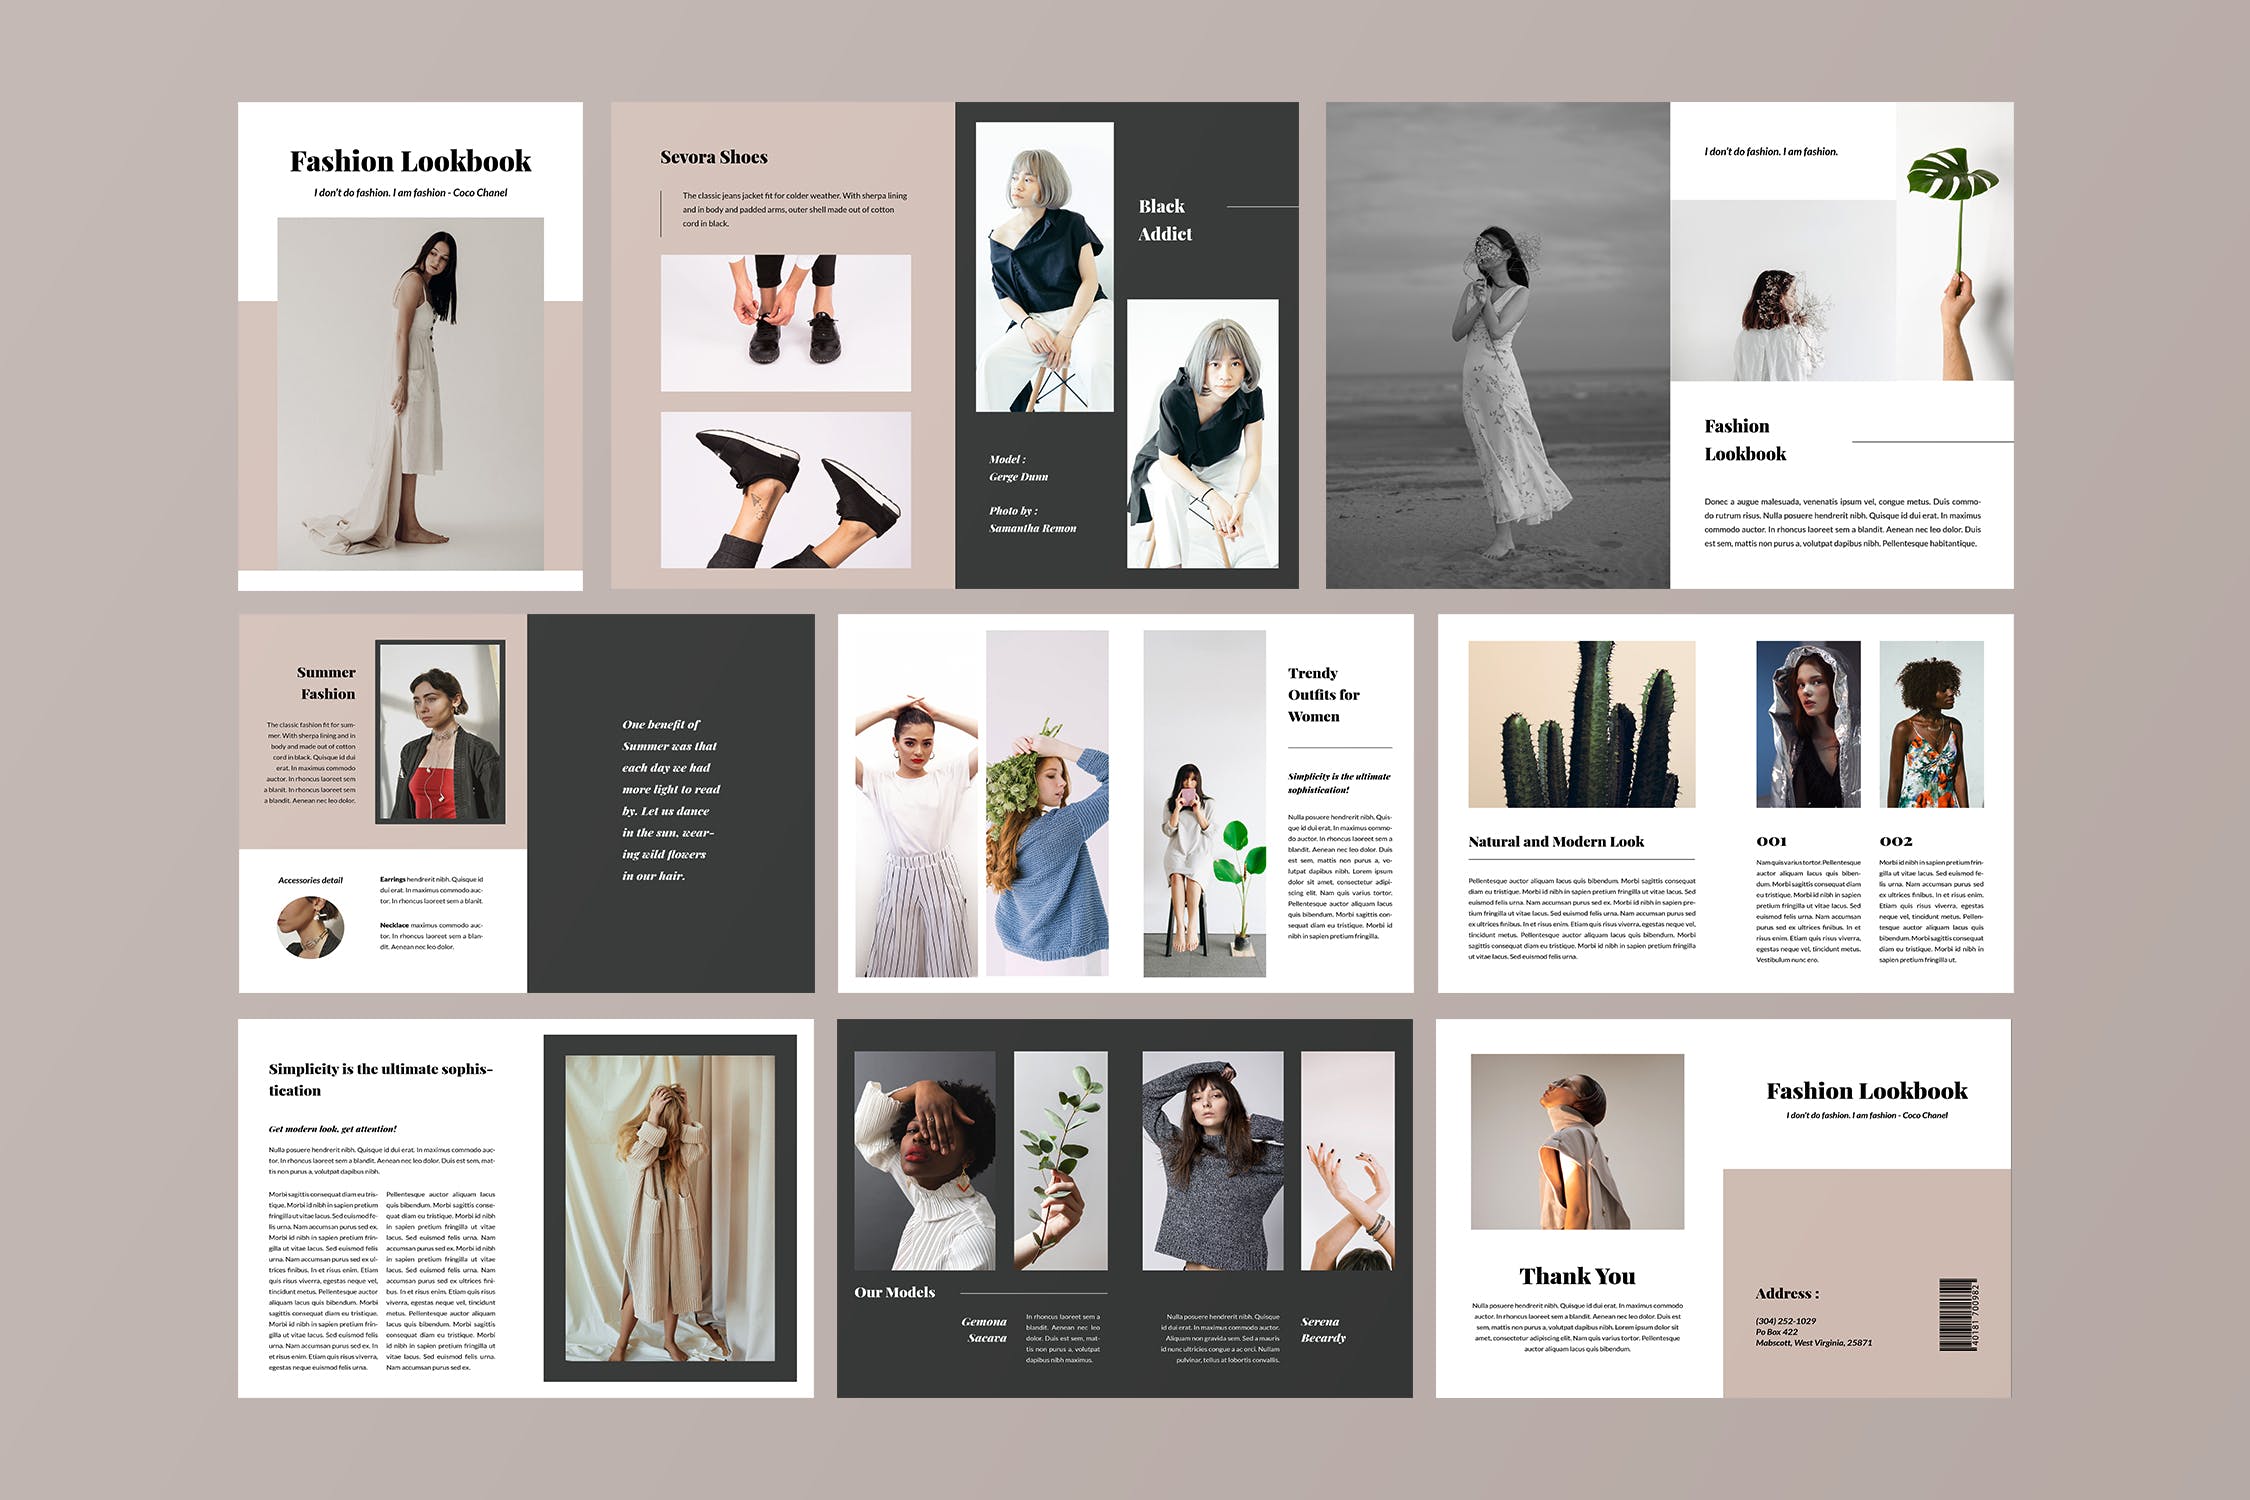 时尚品牌服饰产品手册/产品画册设计模板 Fashion Lookbook Catalogue插图(4)